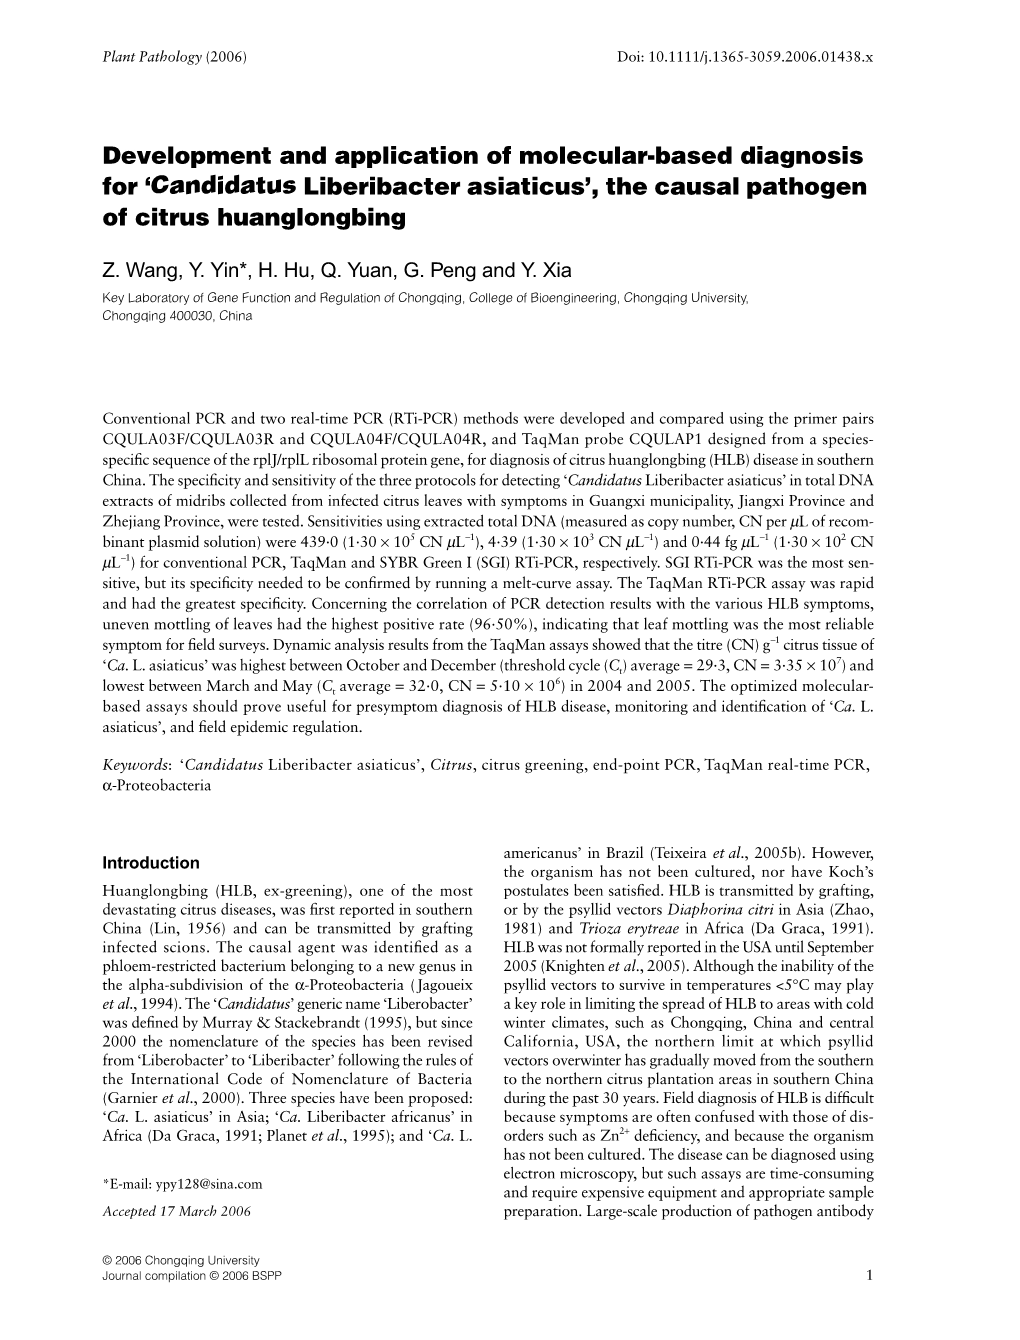 Candidatus Liberibacter Asiaticus’, the Causal Pathogen of Citrus Huanglongbing